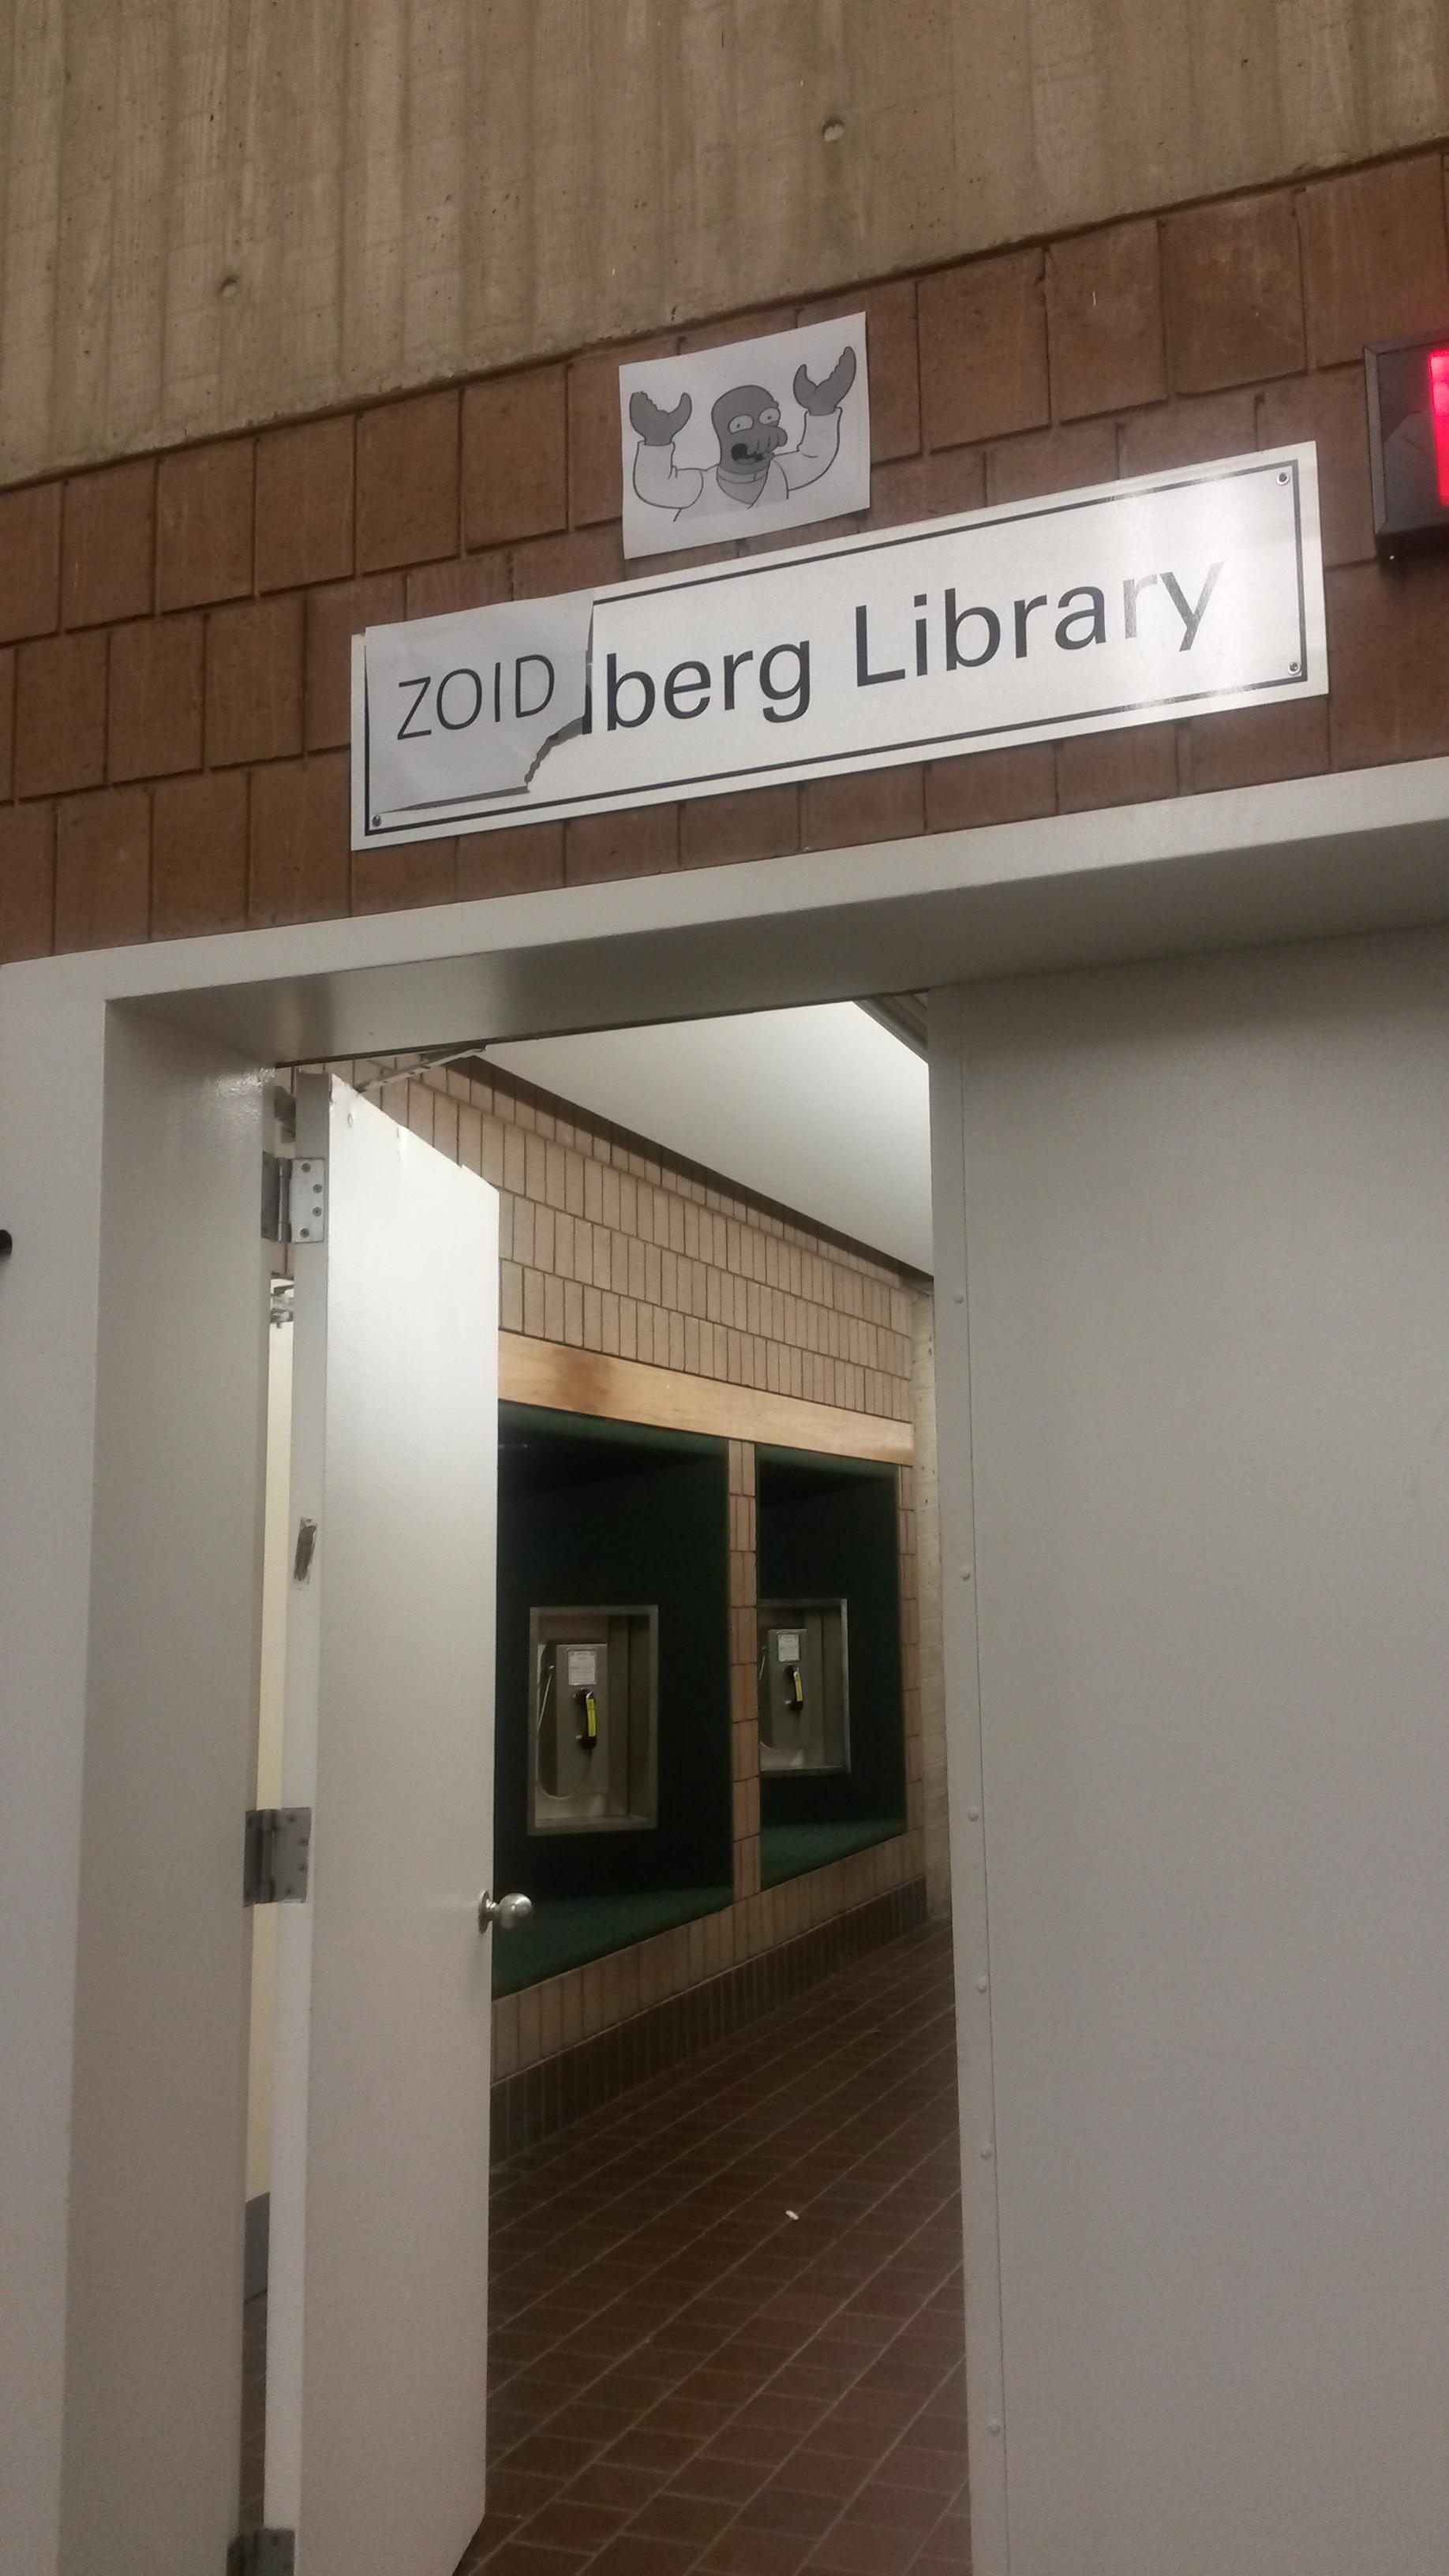 meme - building - Zoid berg Library